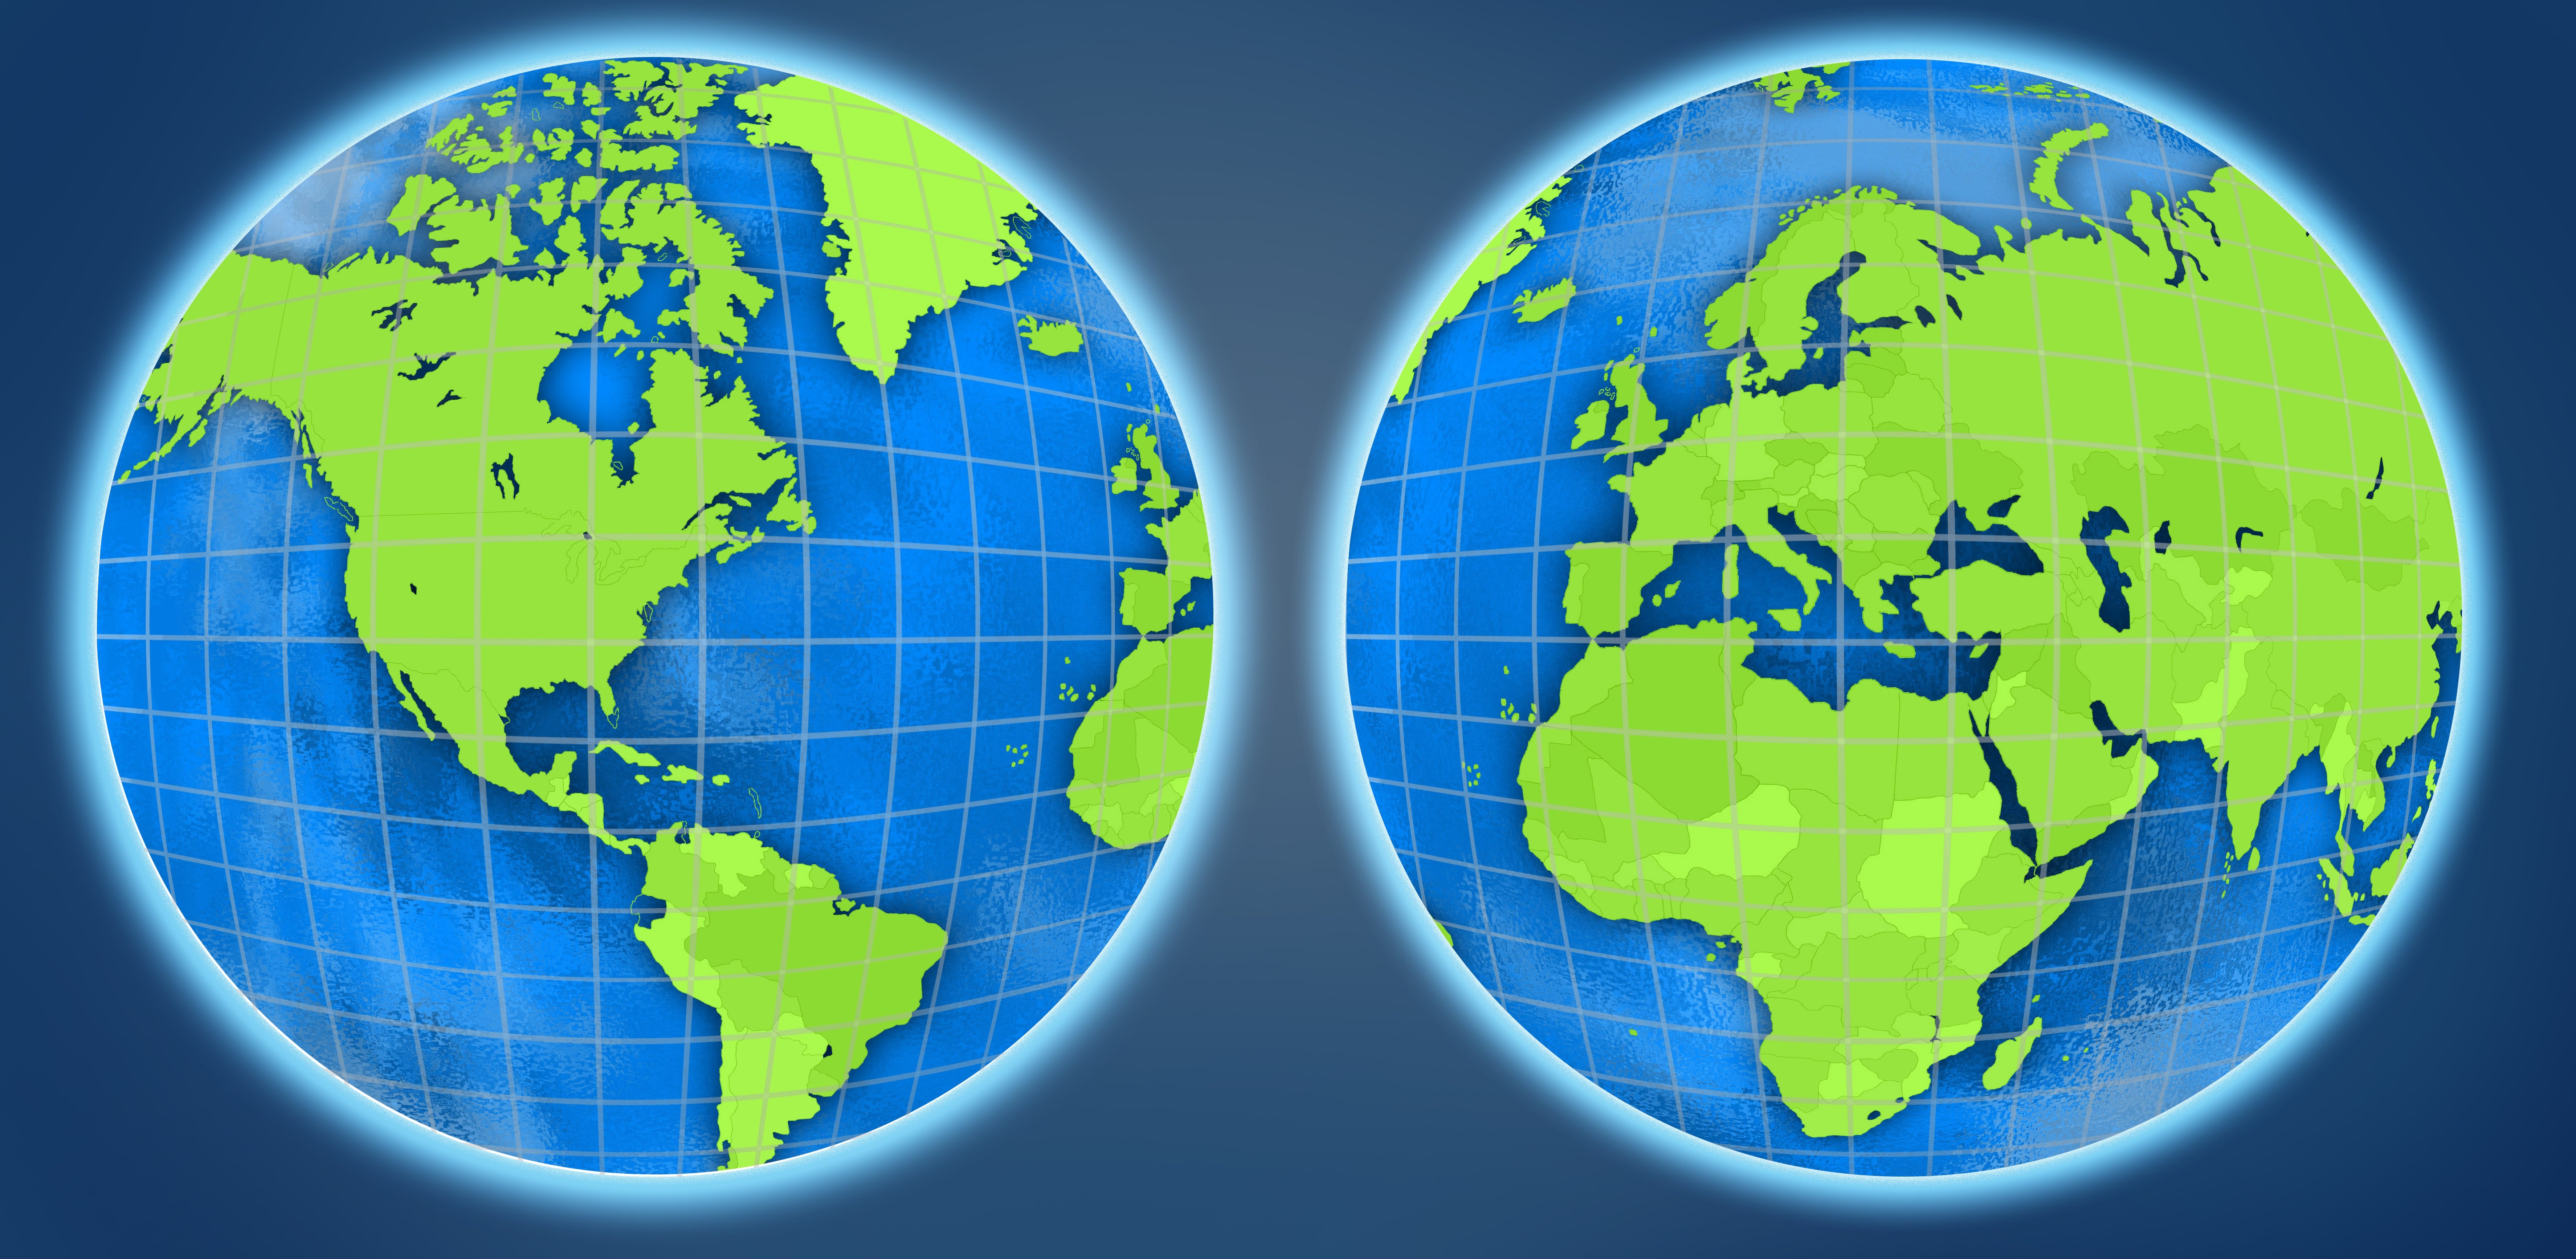 Планета земля атлас. Карта земли. Глобус карта. Глобус карта земли. Географическая карта земного шара.